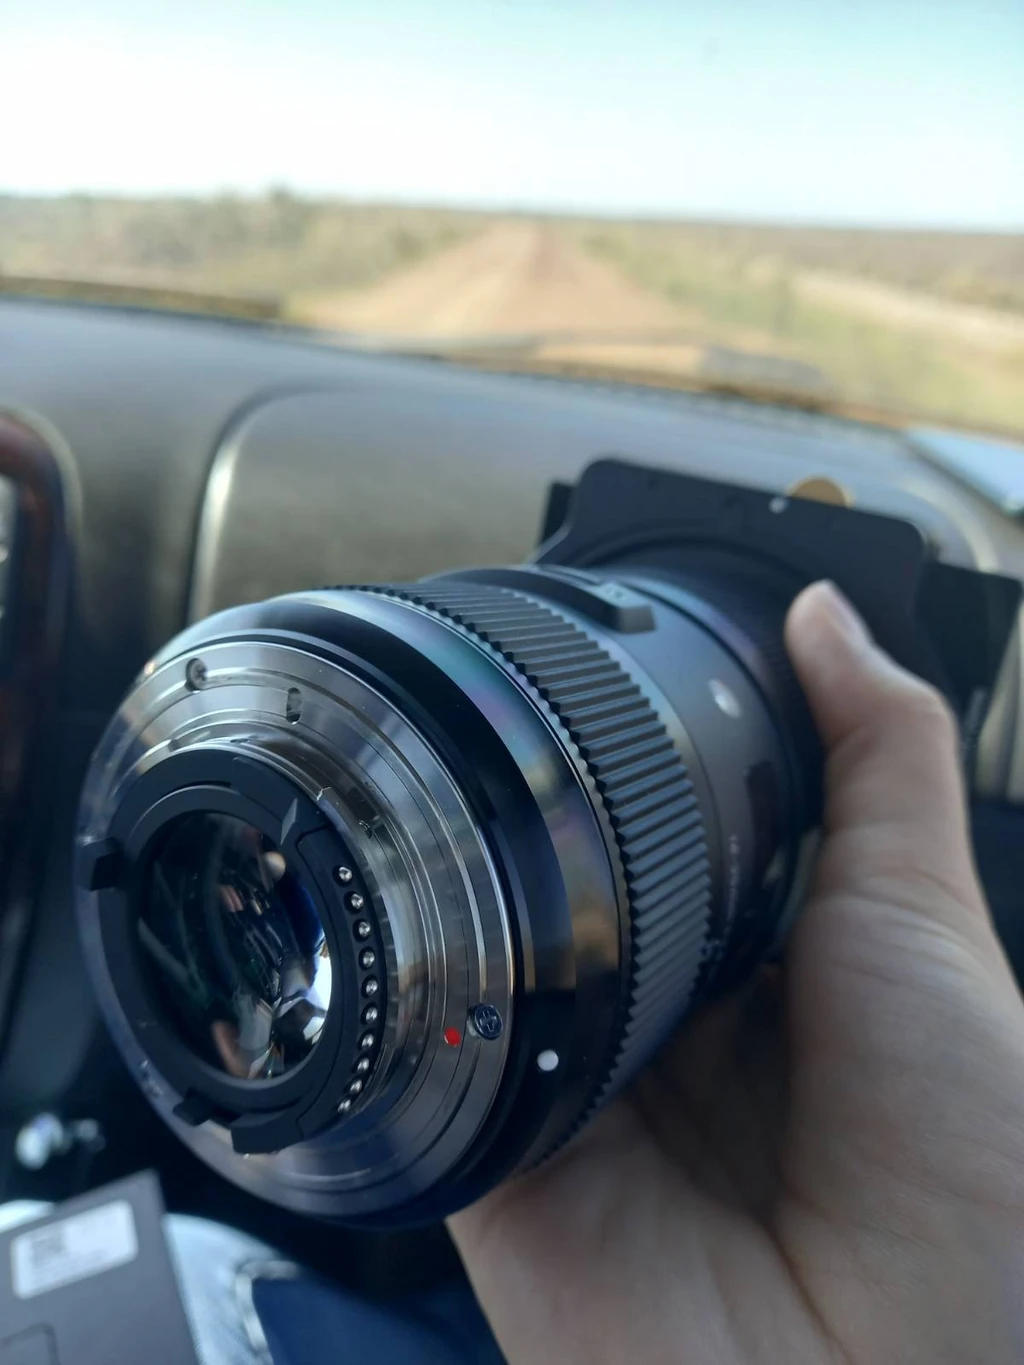 camera nikon 5500 big lens sigma in the desert